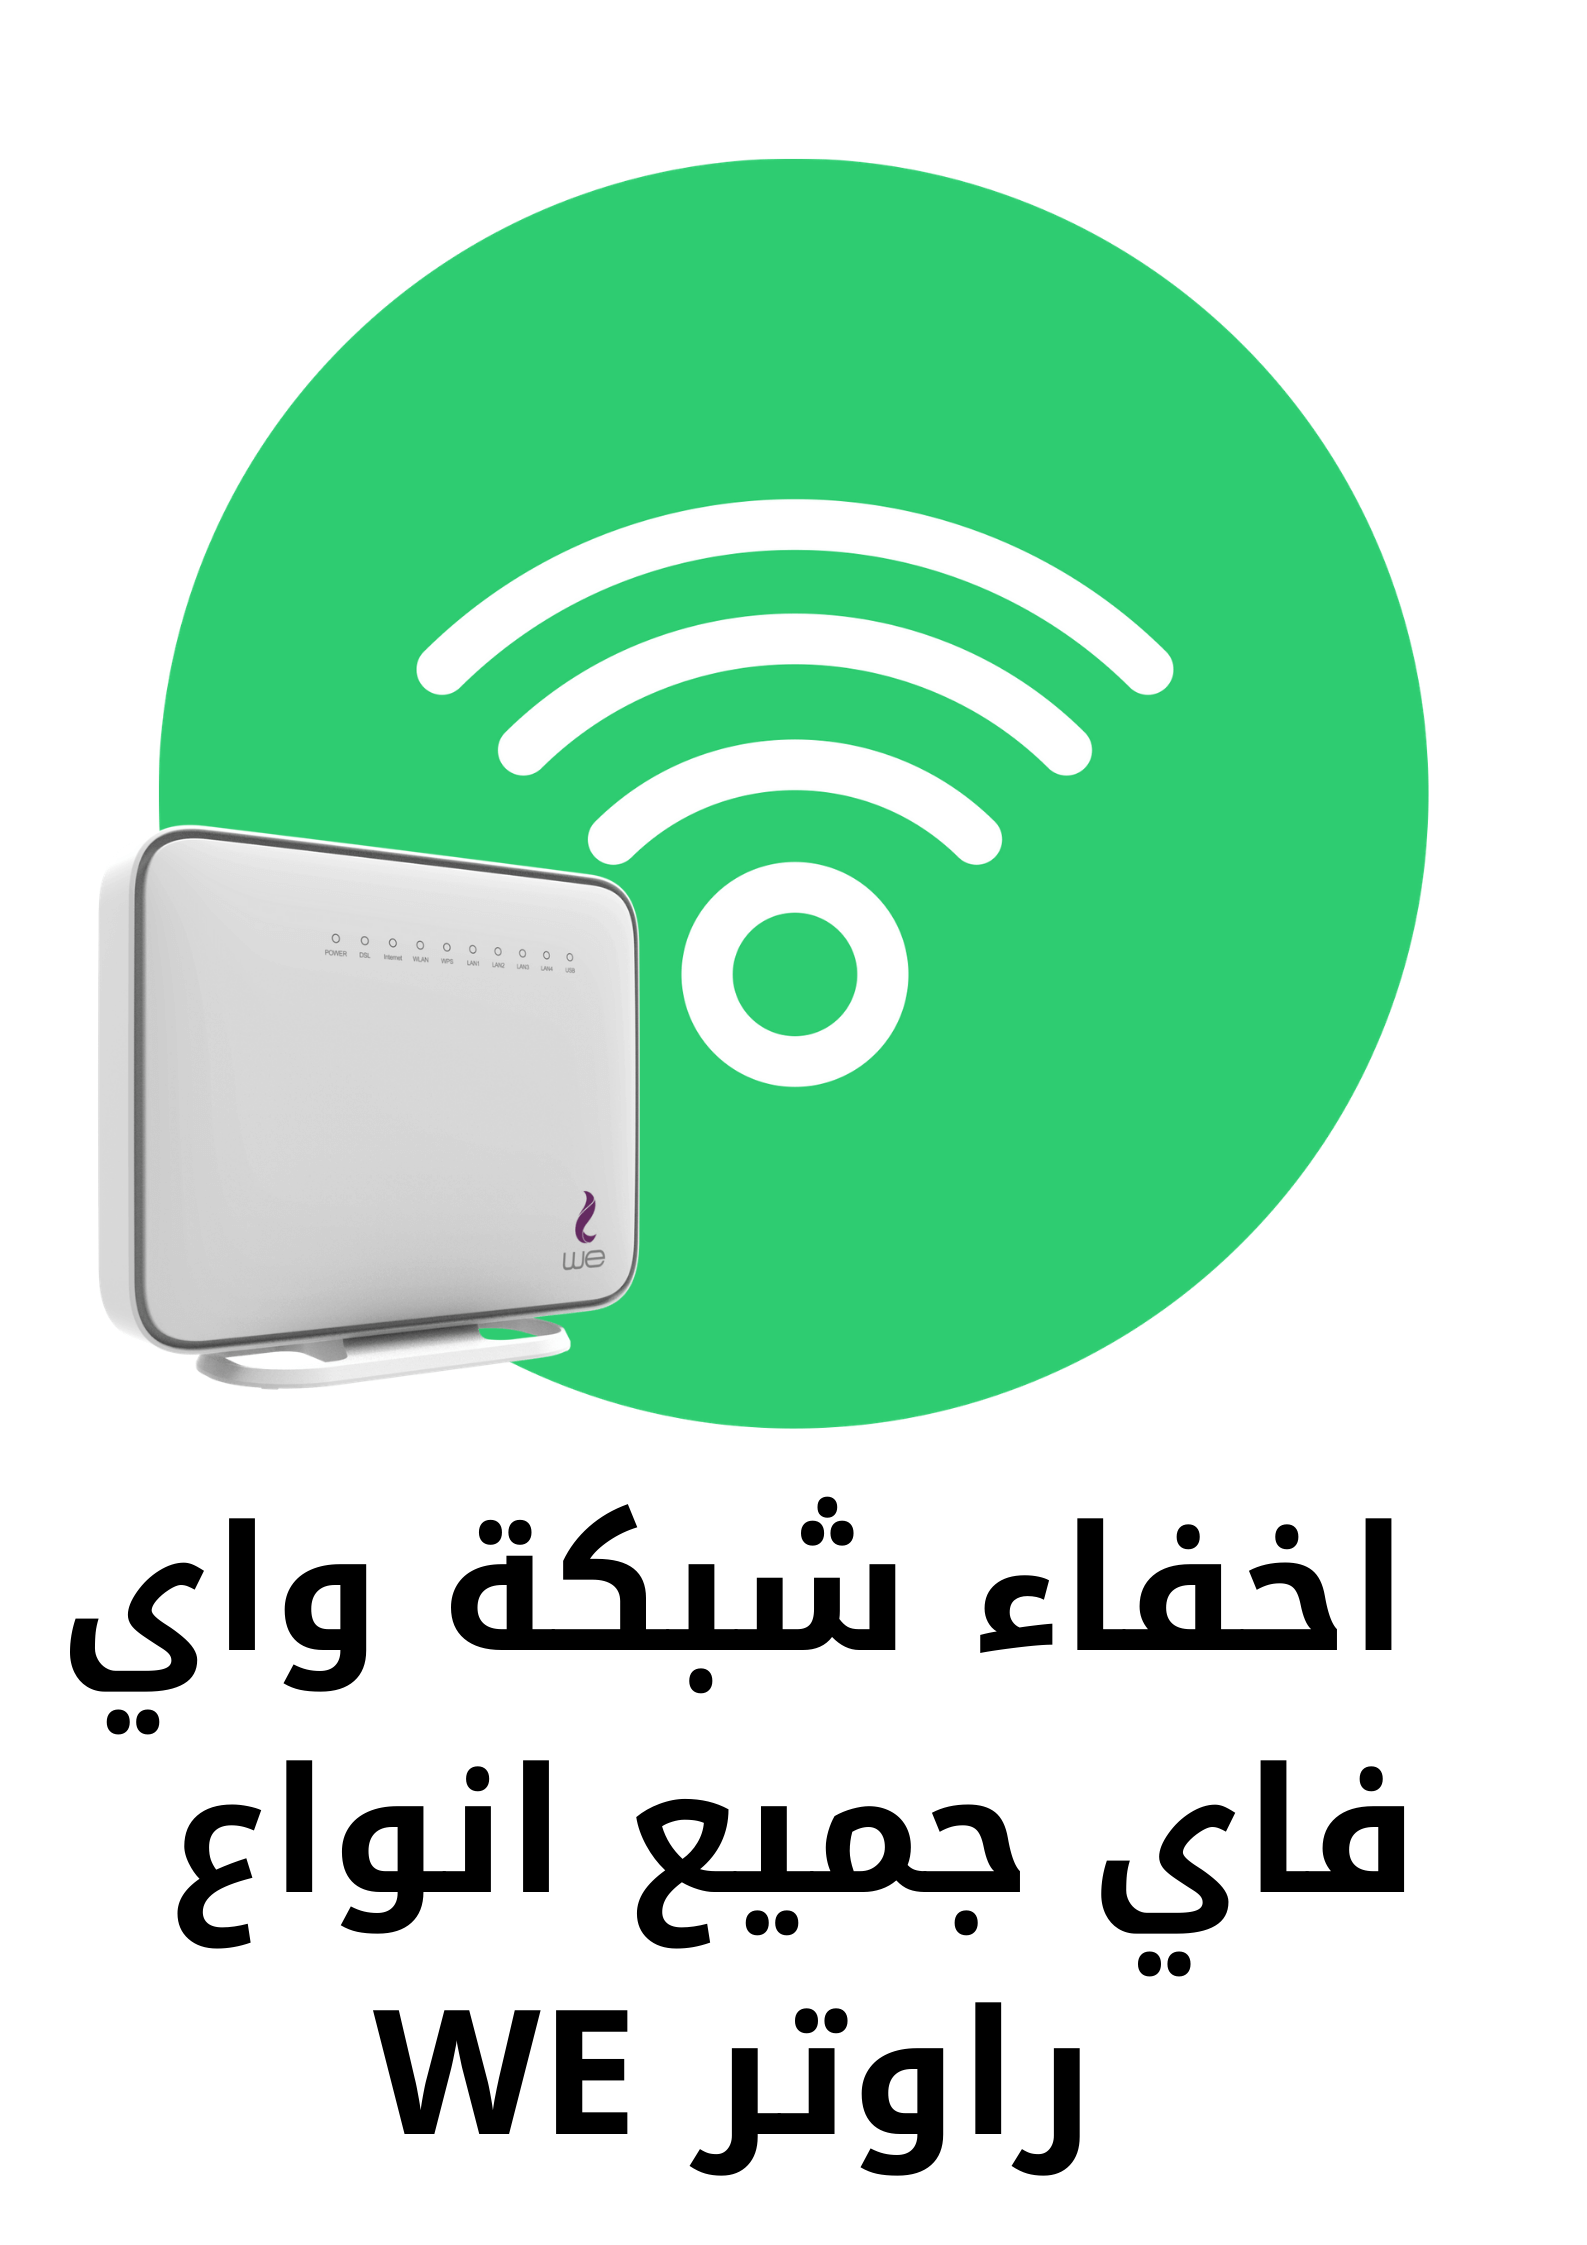 Wi-Fi Router Wi-Fi gizlət